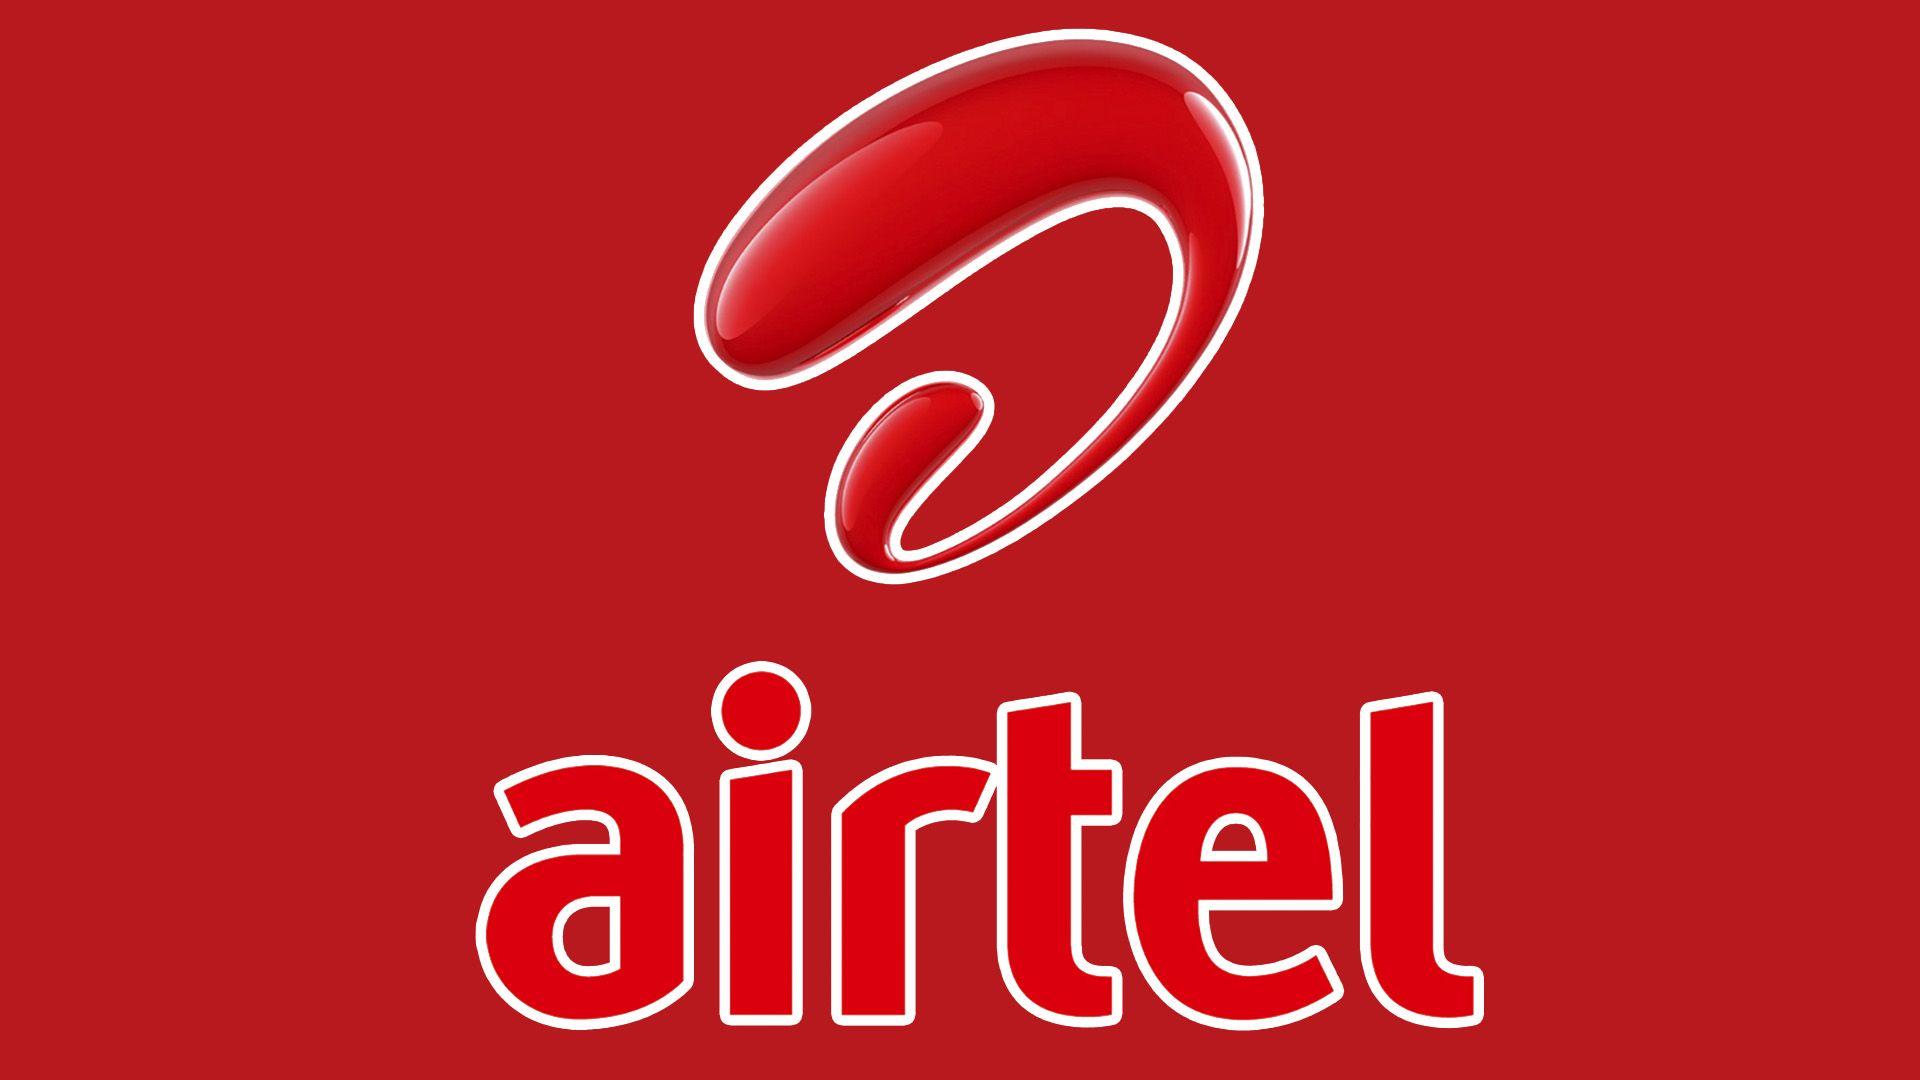 Airtel Logo - Airtel Logo, Airtel Symbol, Meaning, History and Evolution